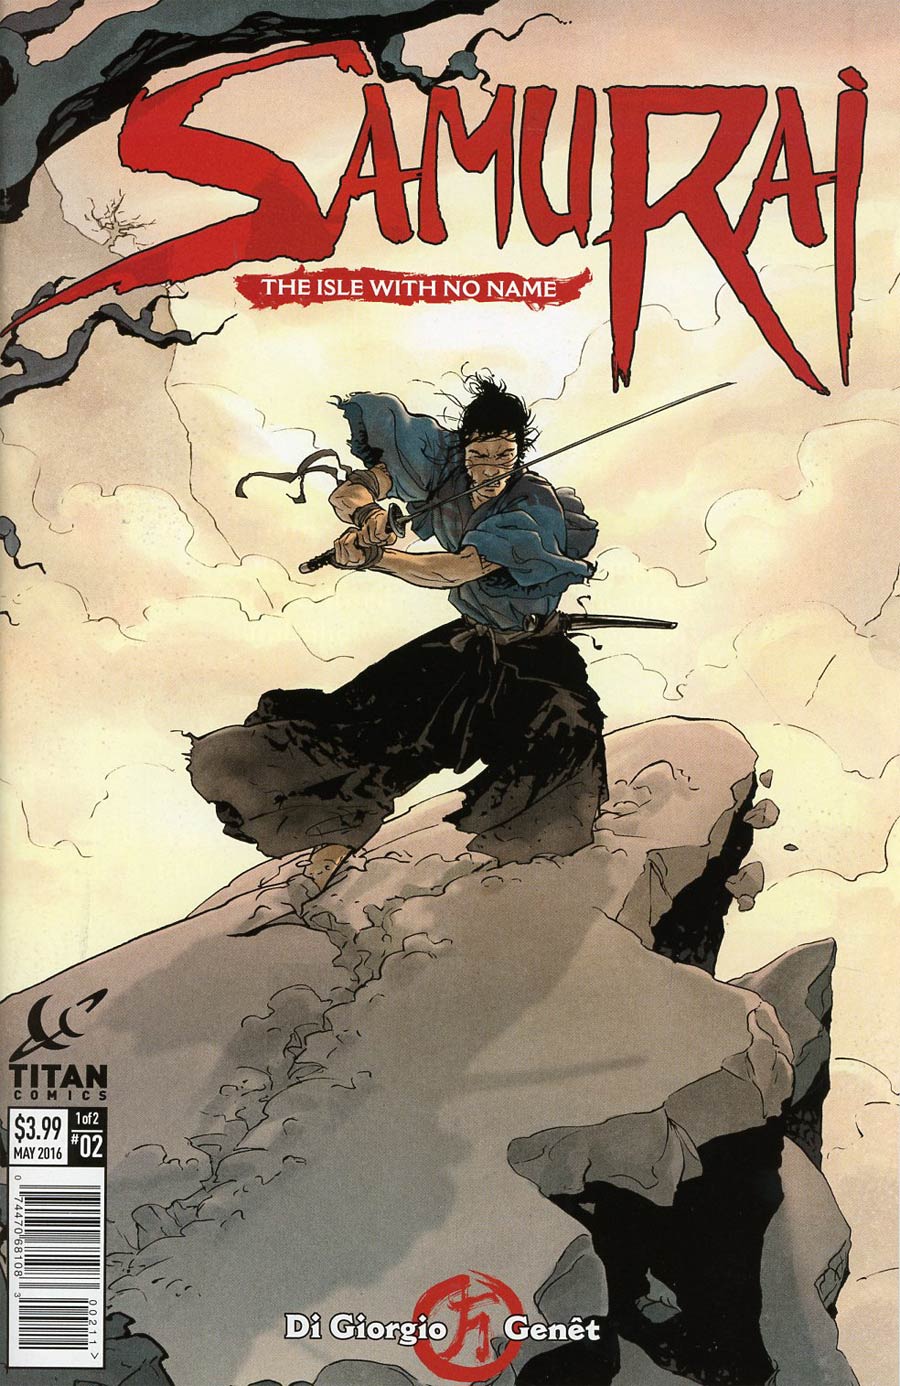 Samurai (Titan Comics) #2 Cover A Regular Frederic Genet Cover